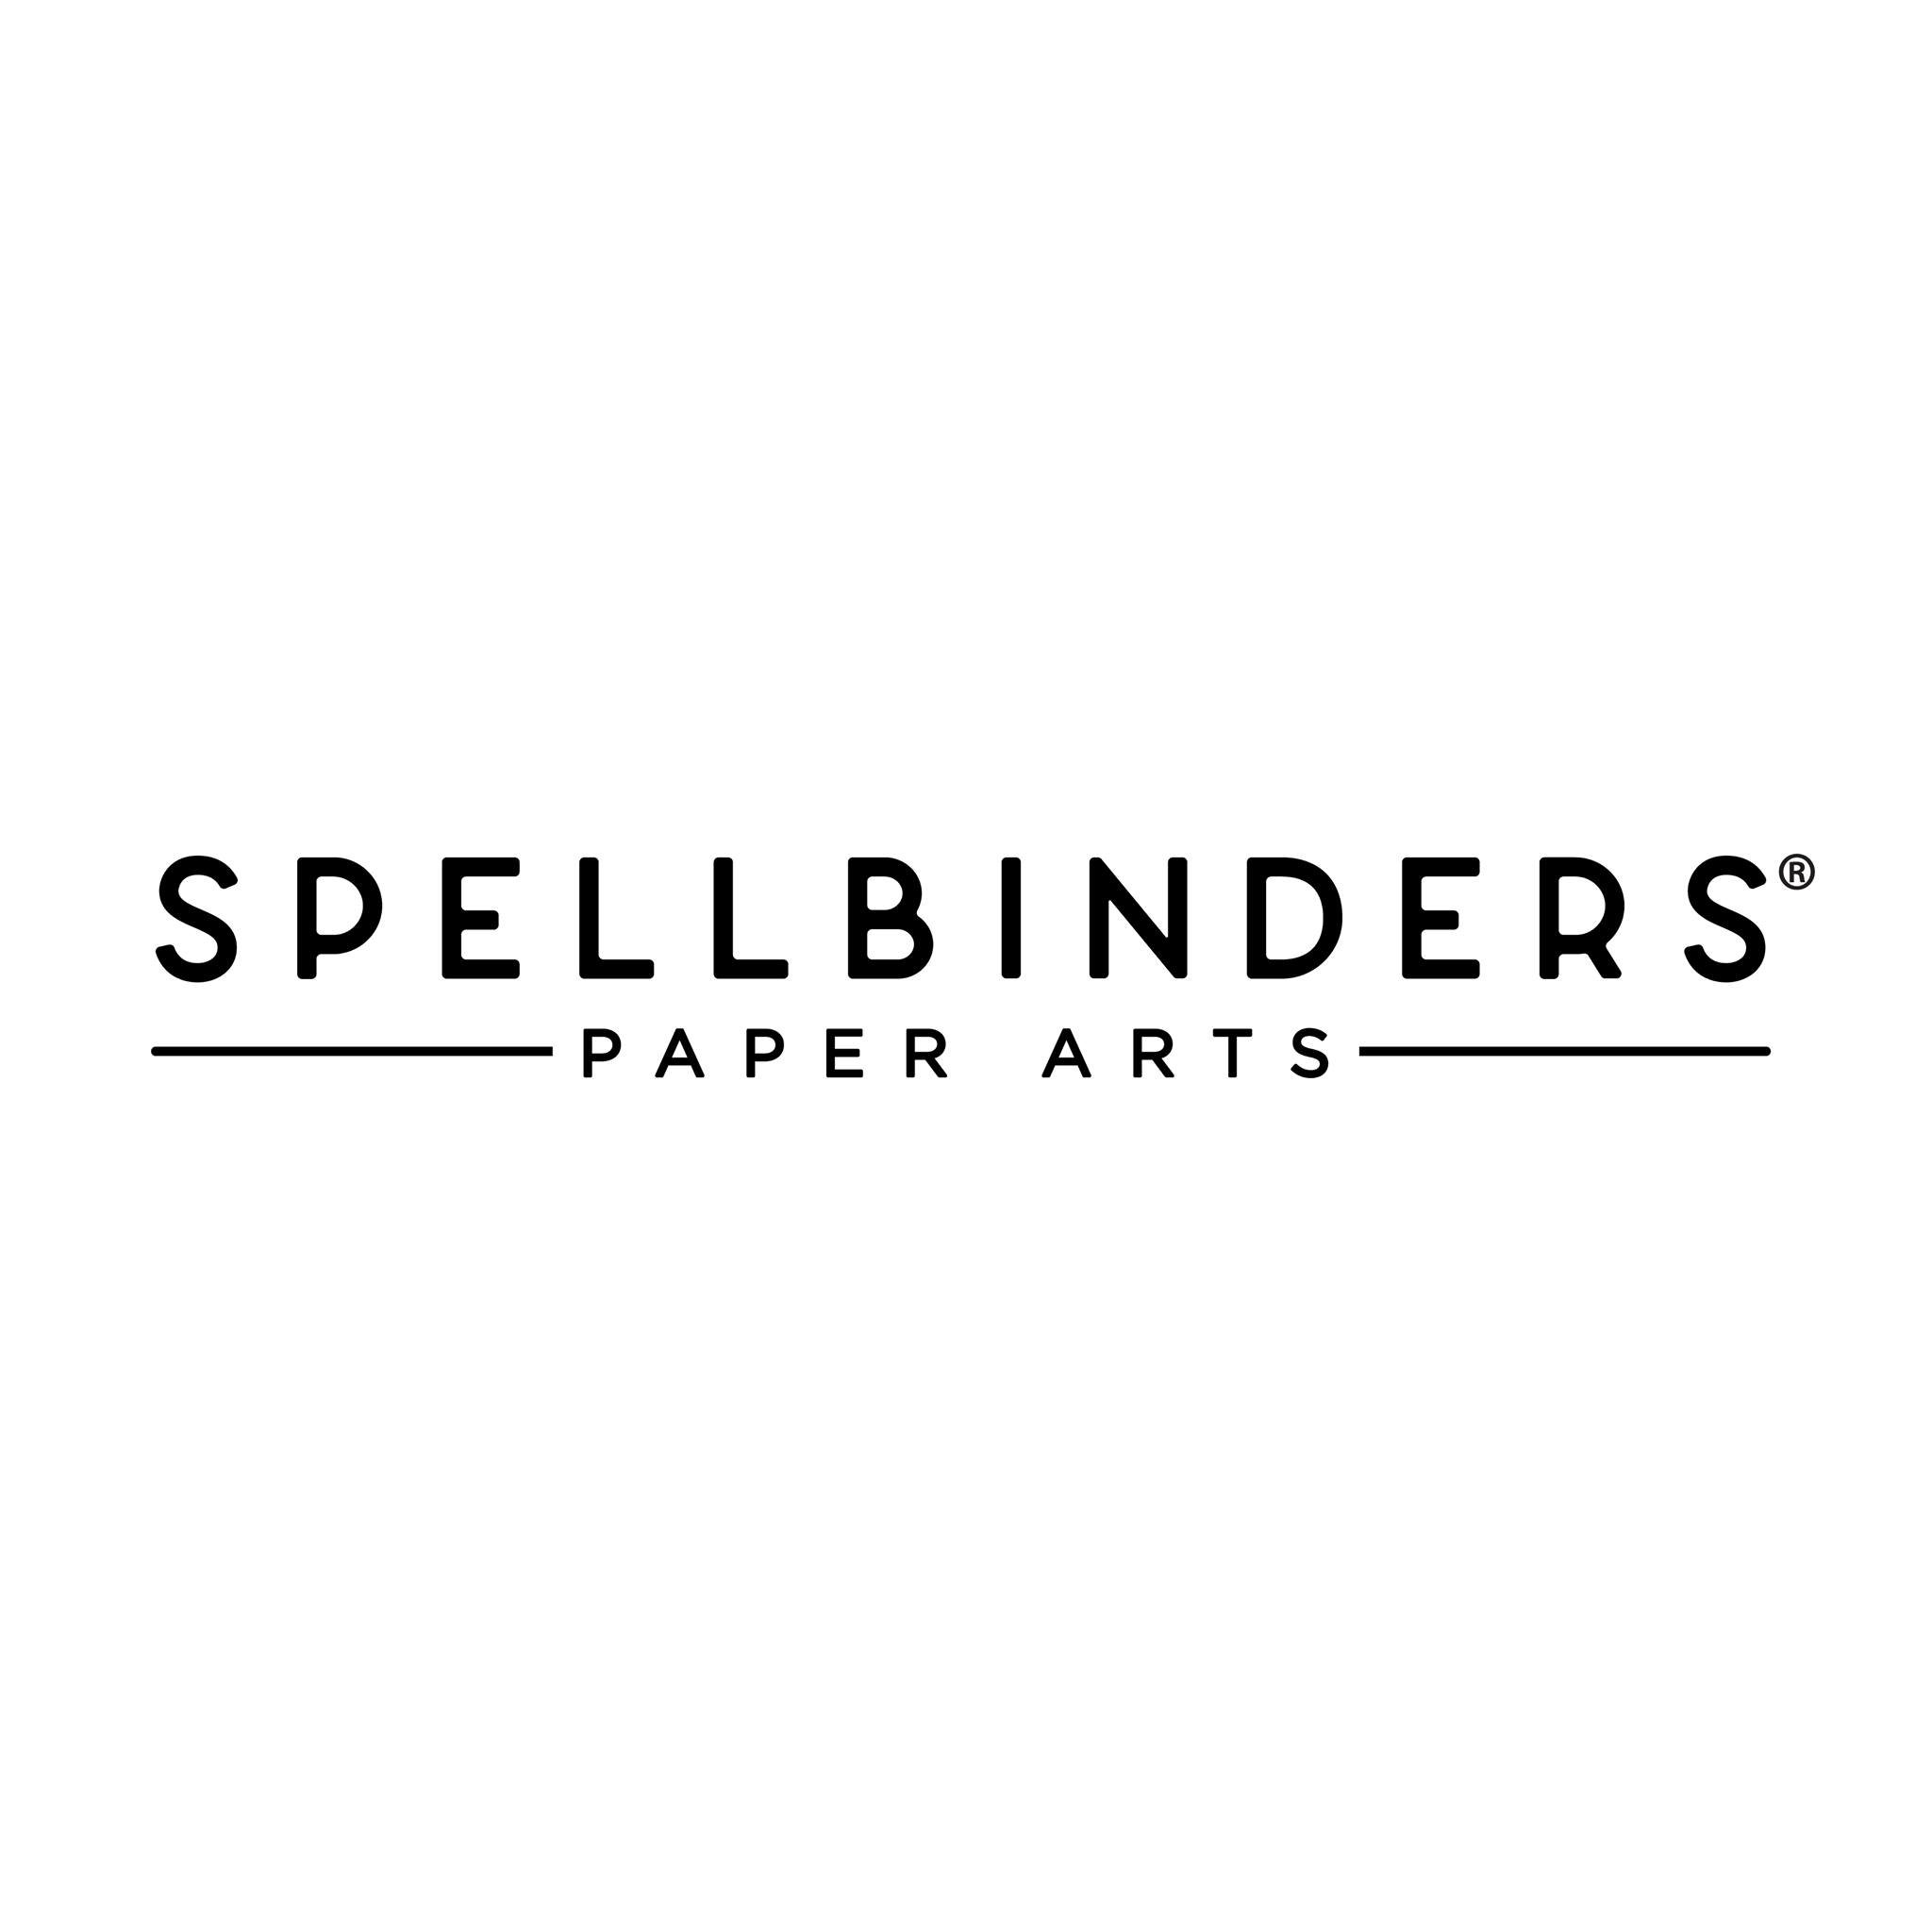 spellbinders logo.jpeg